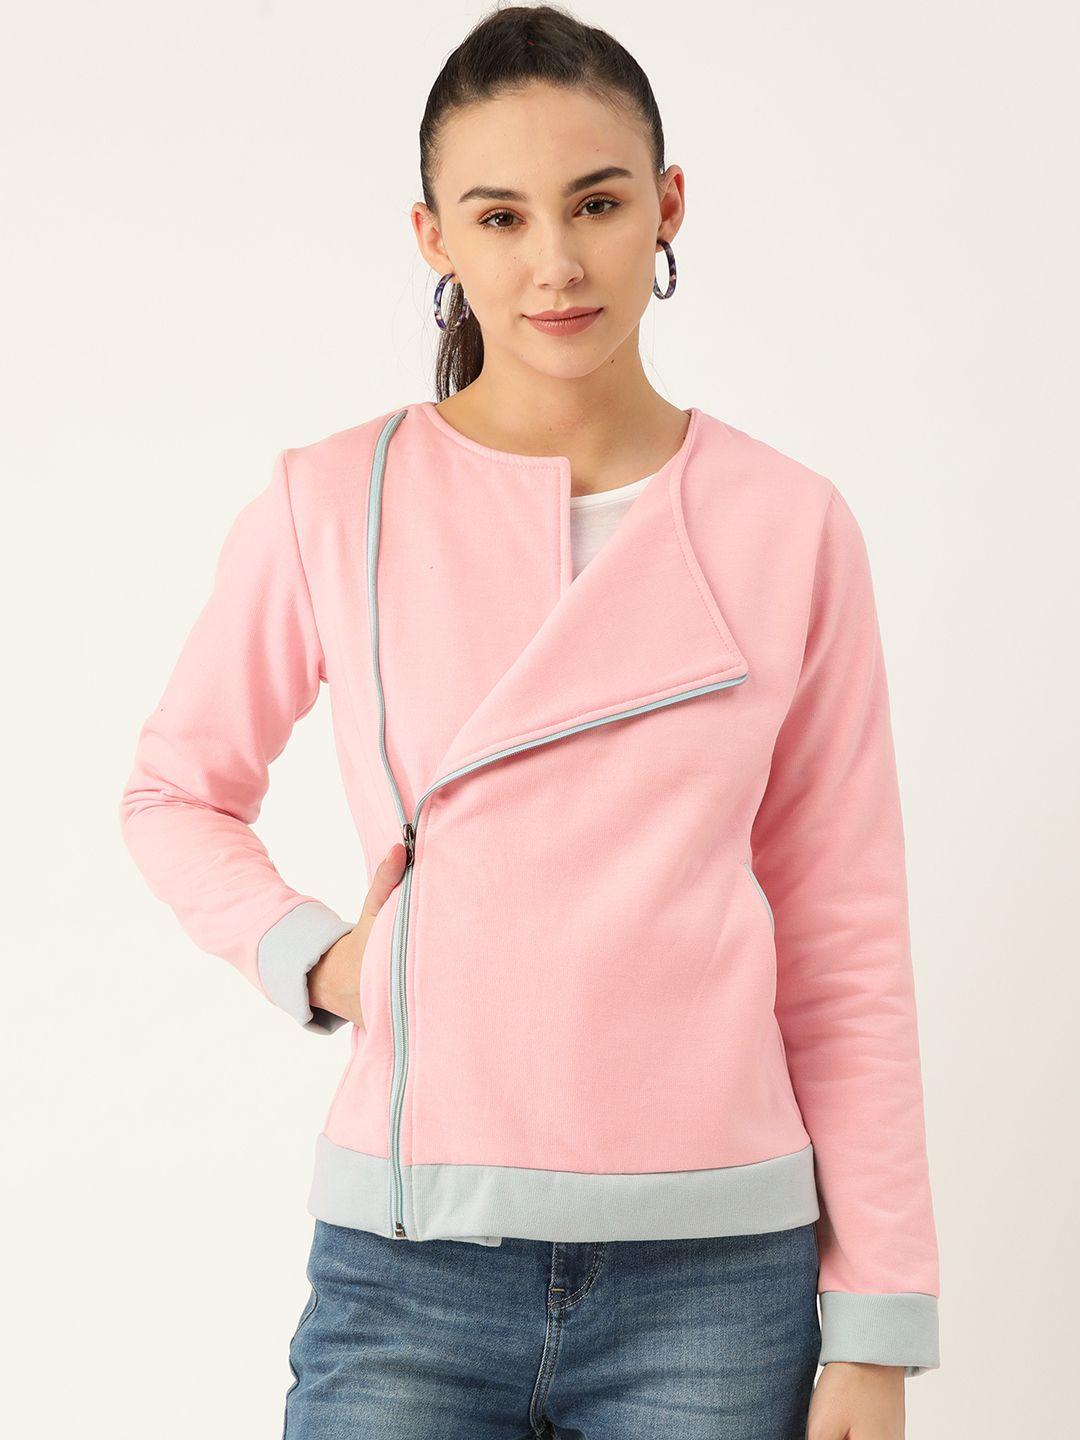 alsace lorraine paris women pink solid sweatshirt